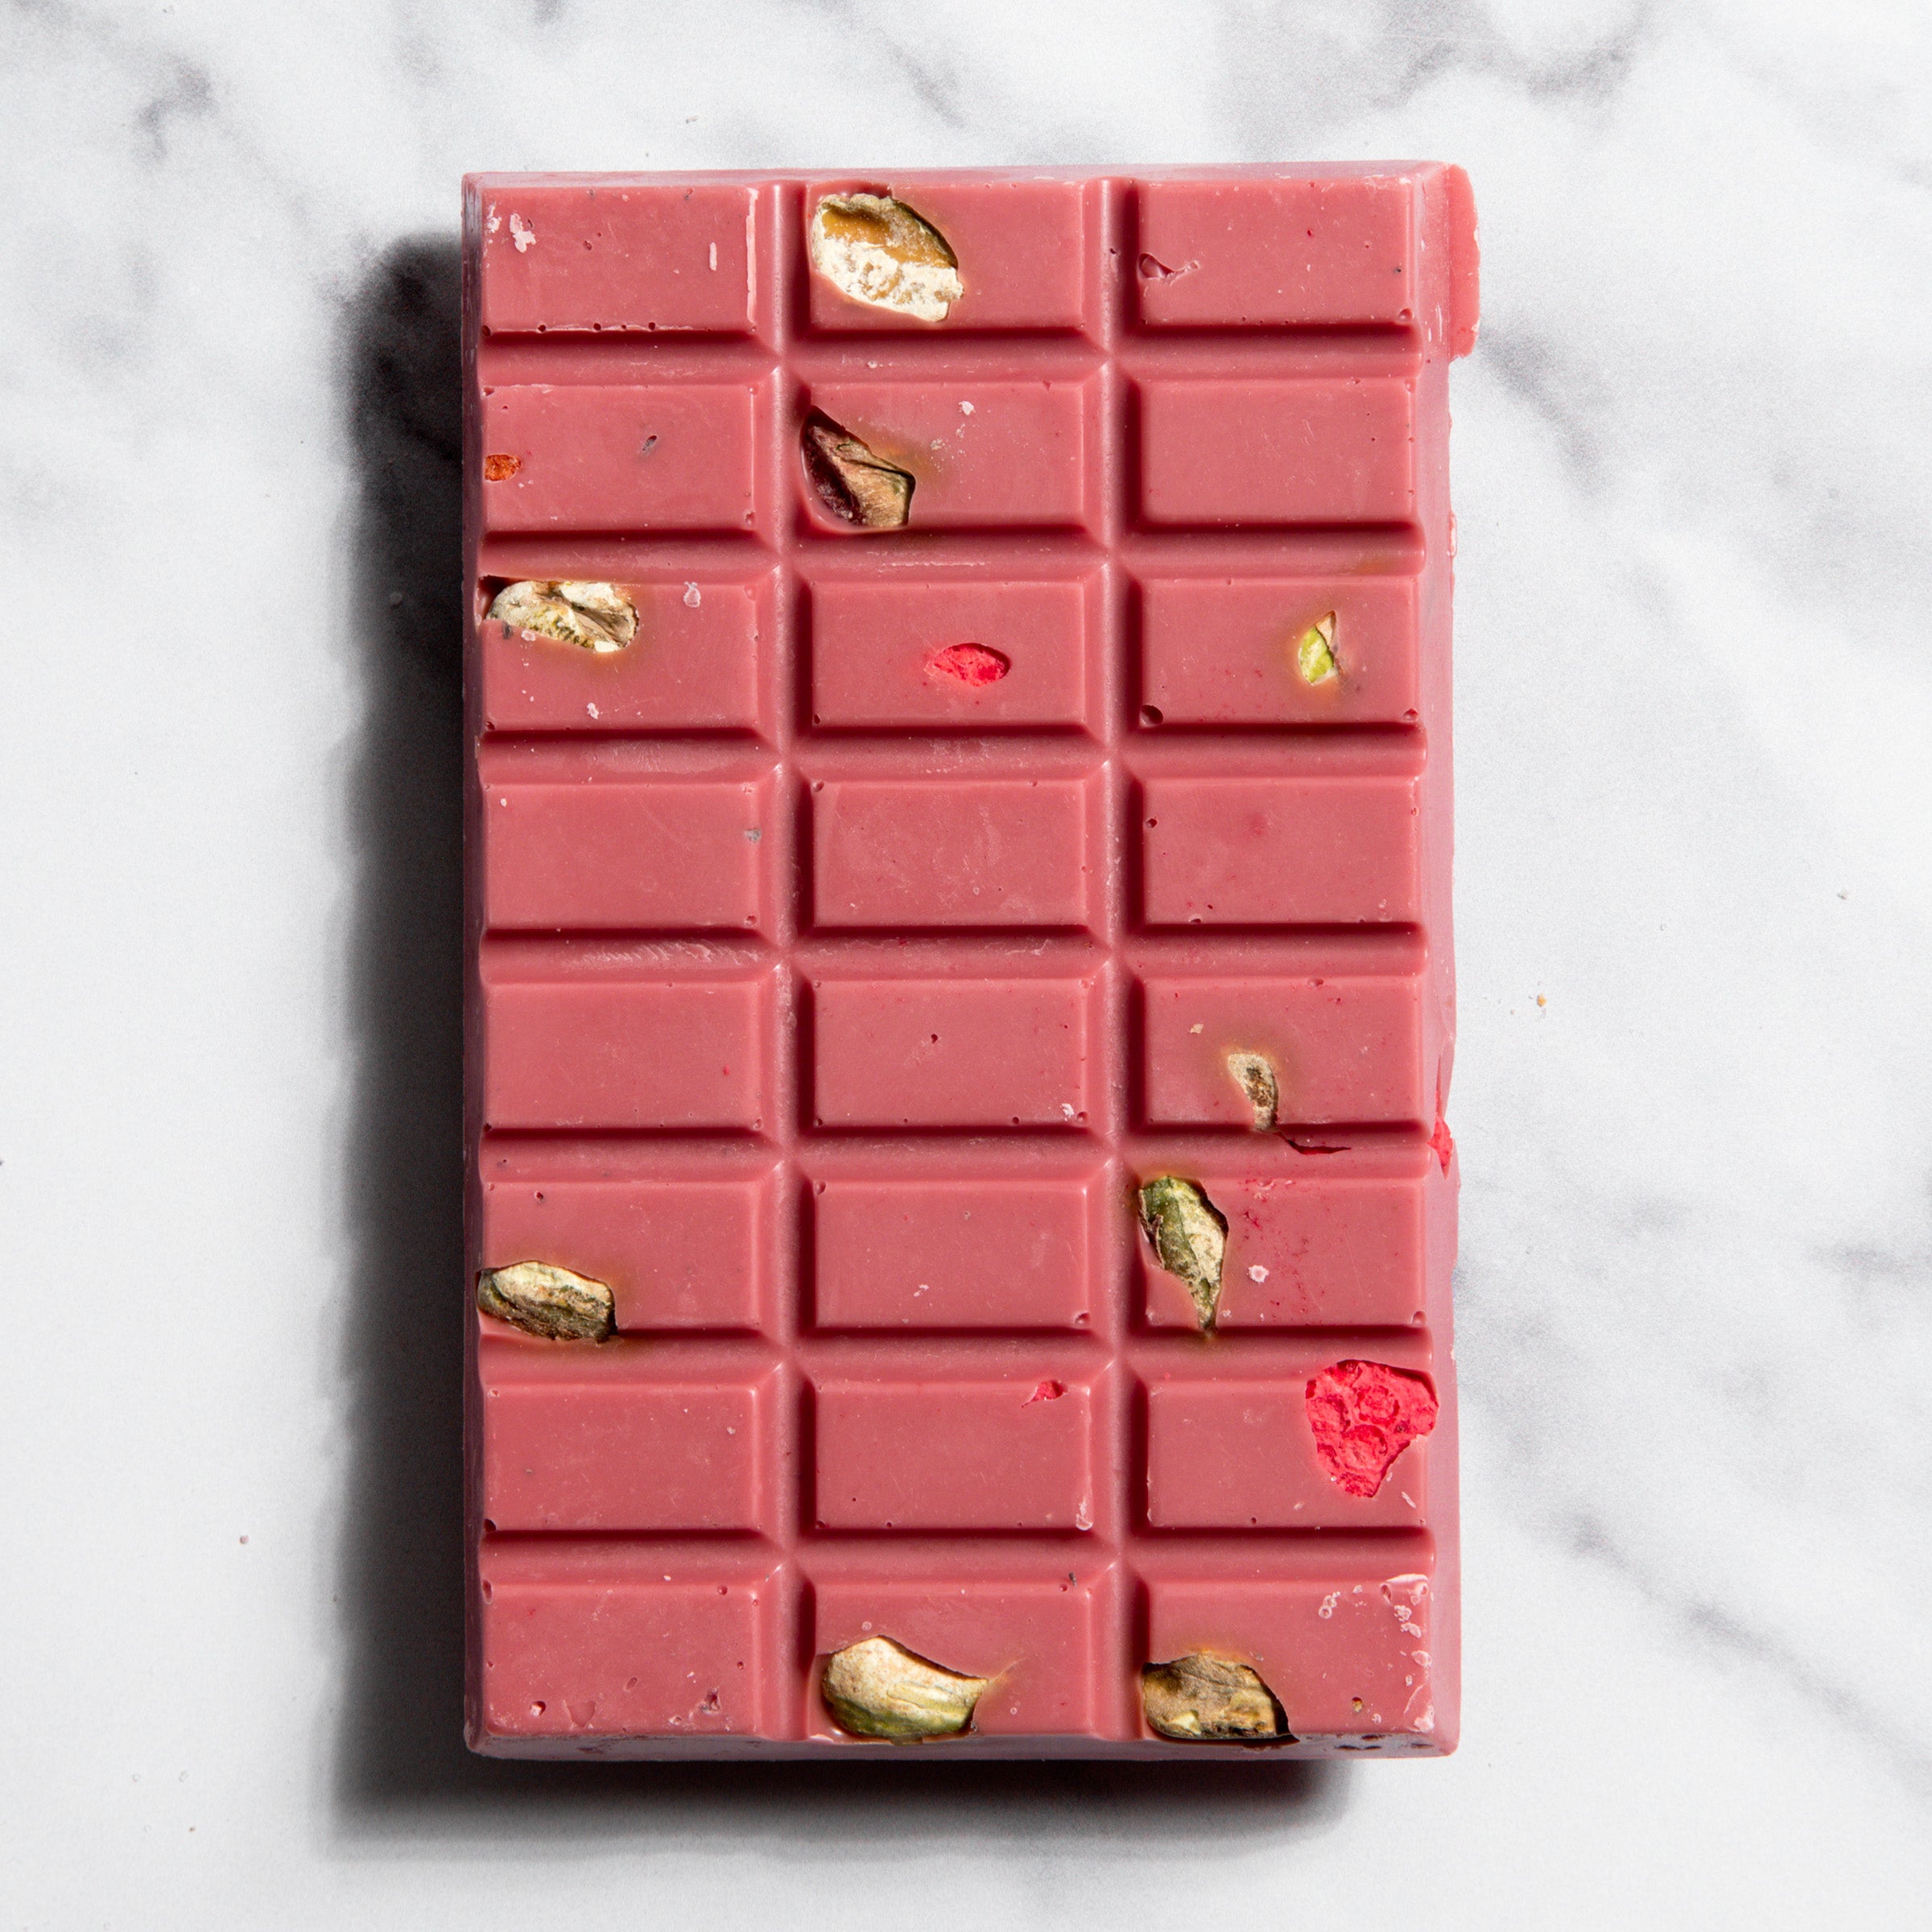 Ruby Raspberry Pistachio Chocolate Bar